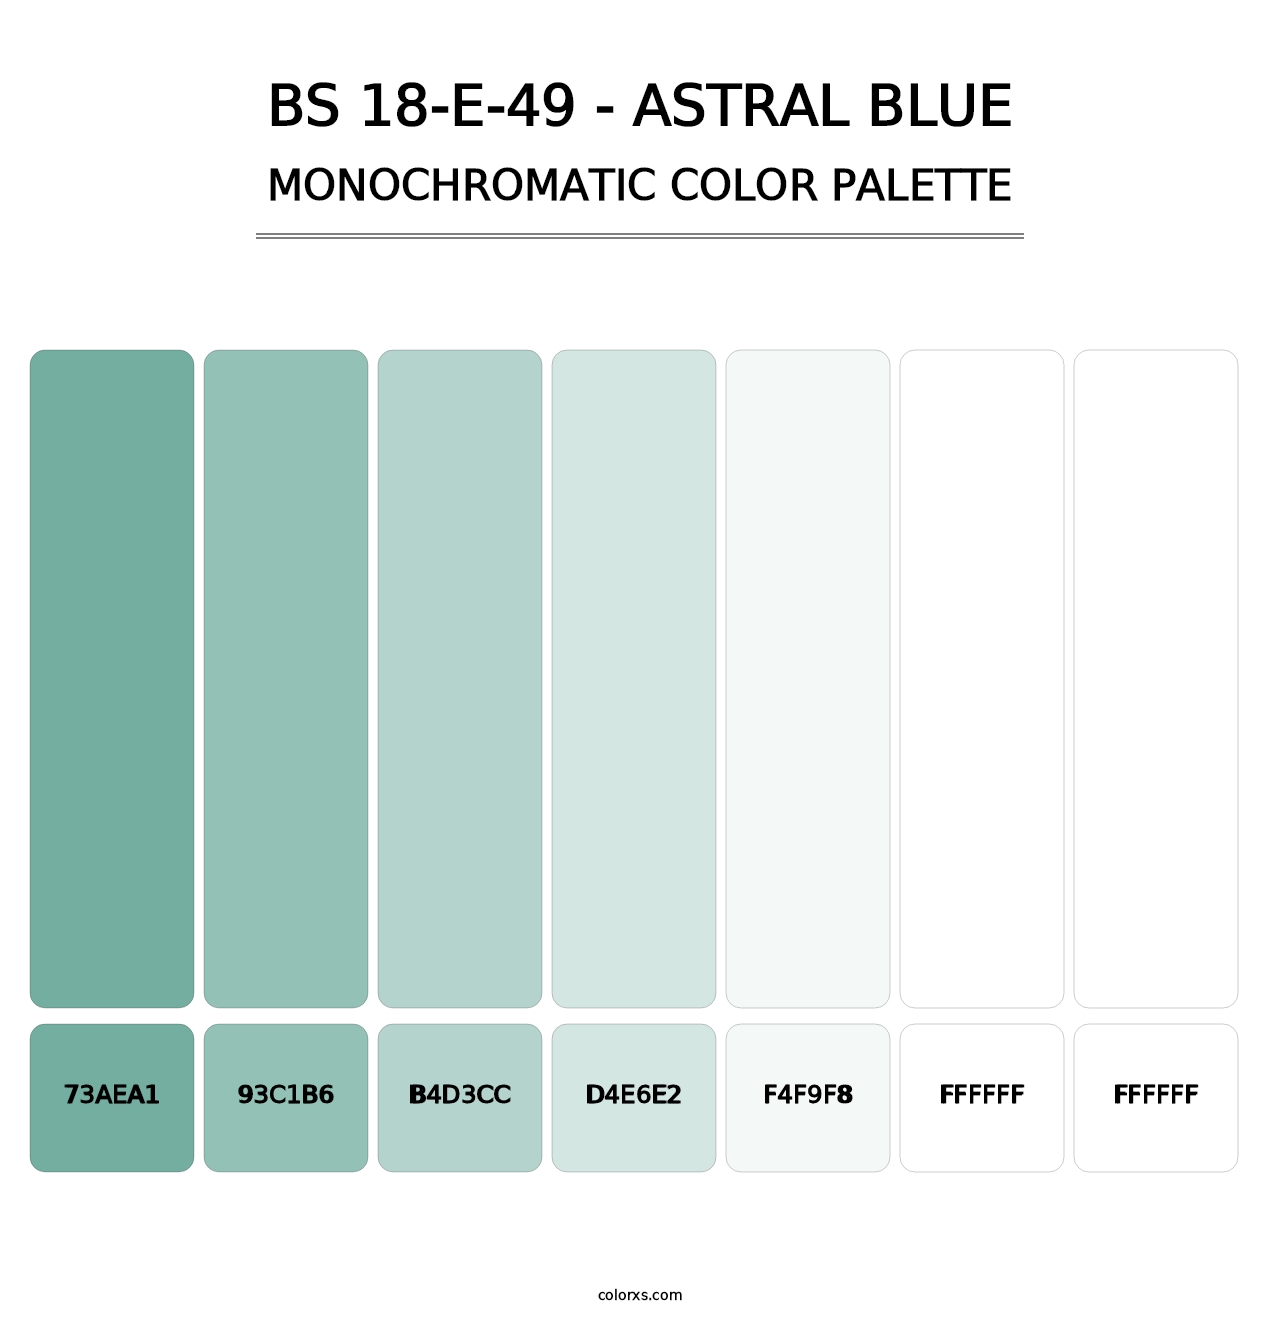 BS 18-E-49 - Astral Blue - Monochromatic Color Palette